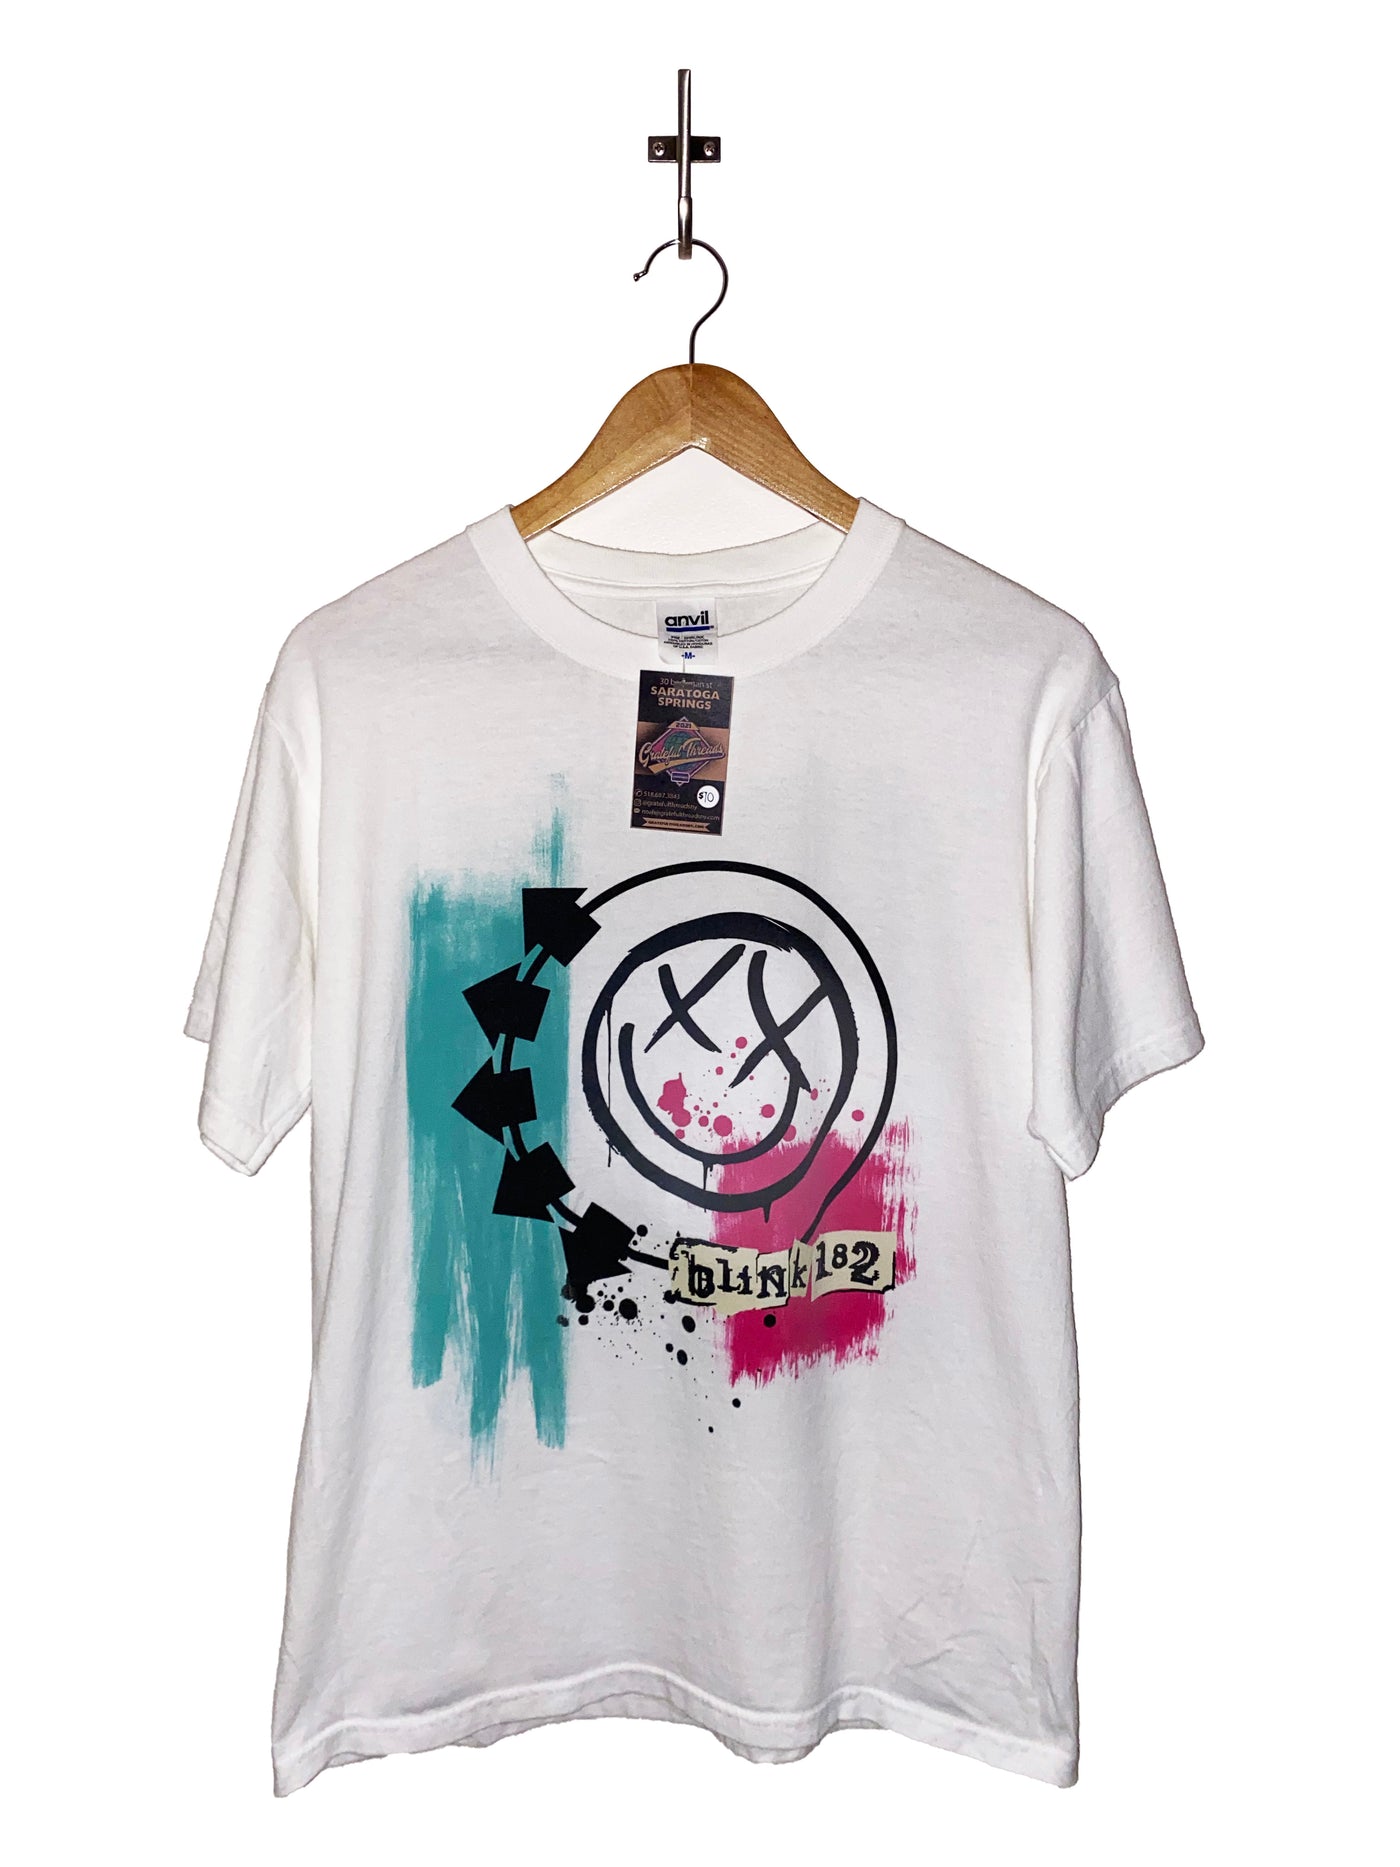 Vintage Blink 182 Tour T-Shirt